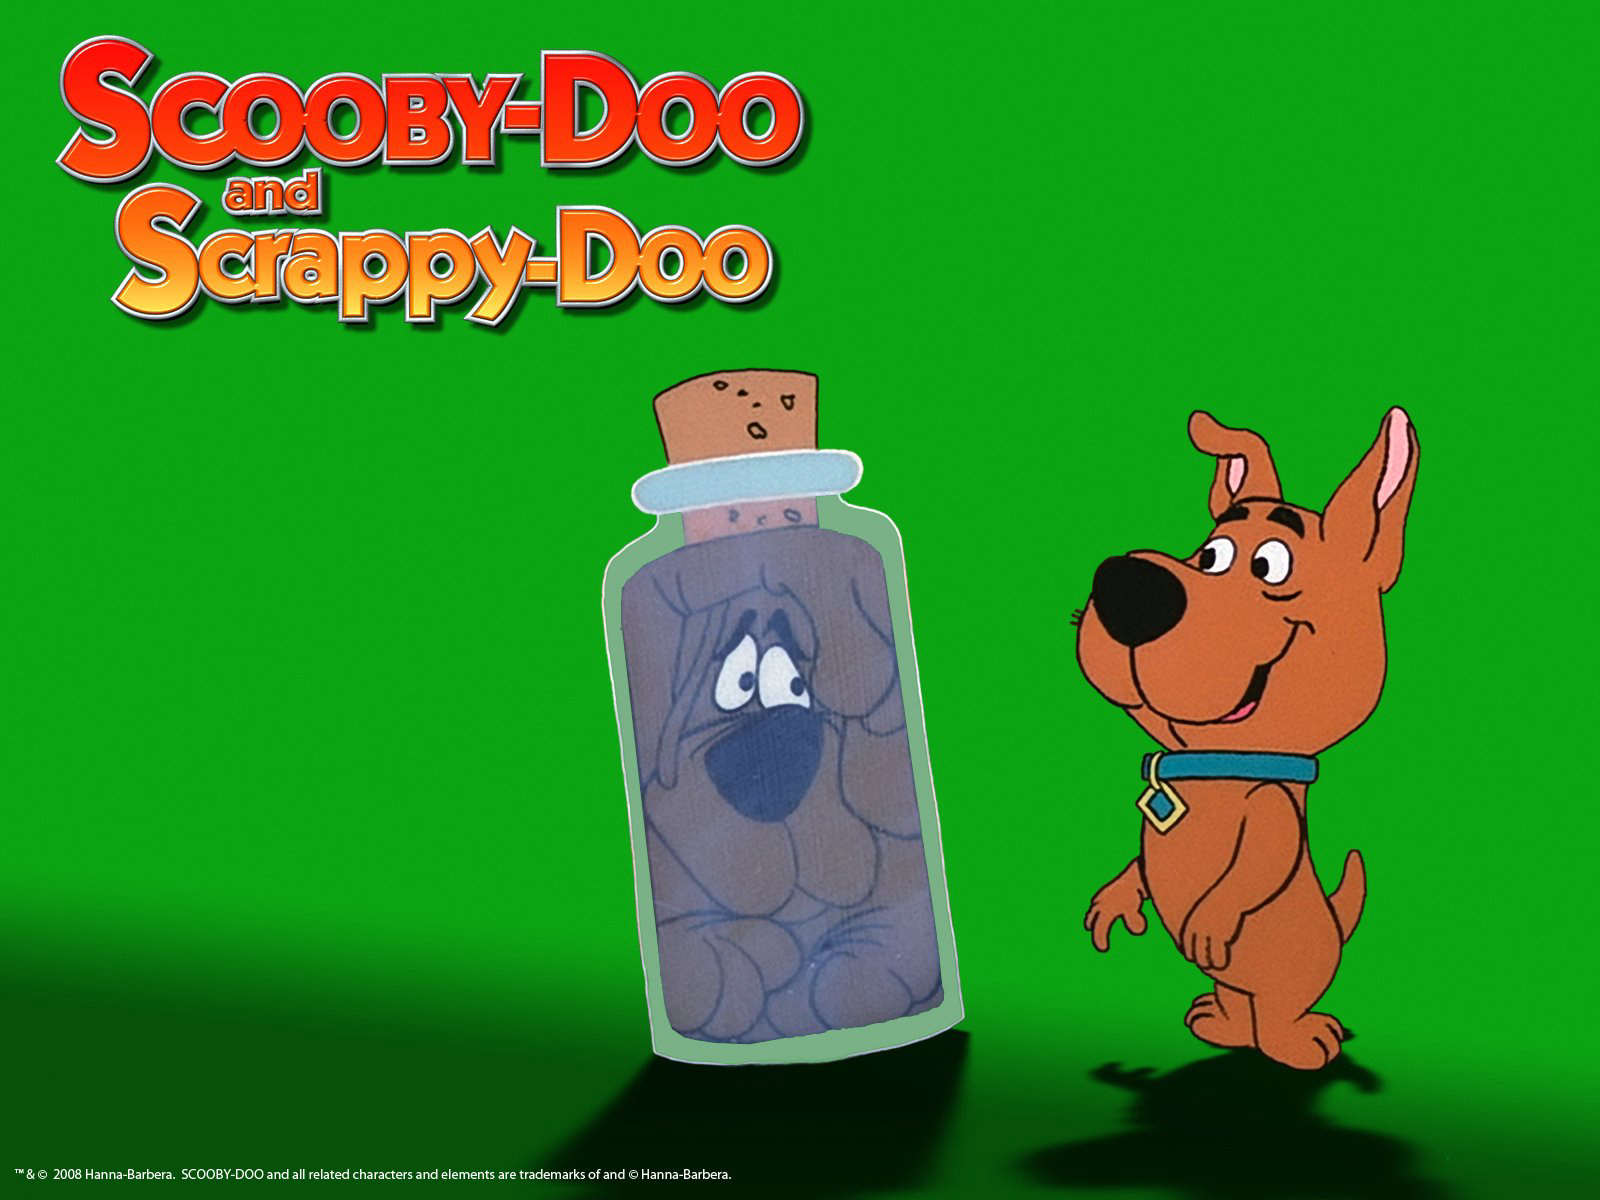 Scooby-Doo and Scrappy-Doo (Season 3) / Scooby-Doo and Scrappy-Doo (Season 3) (1981)